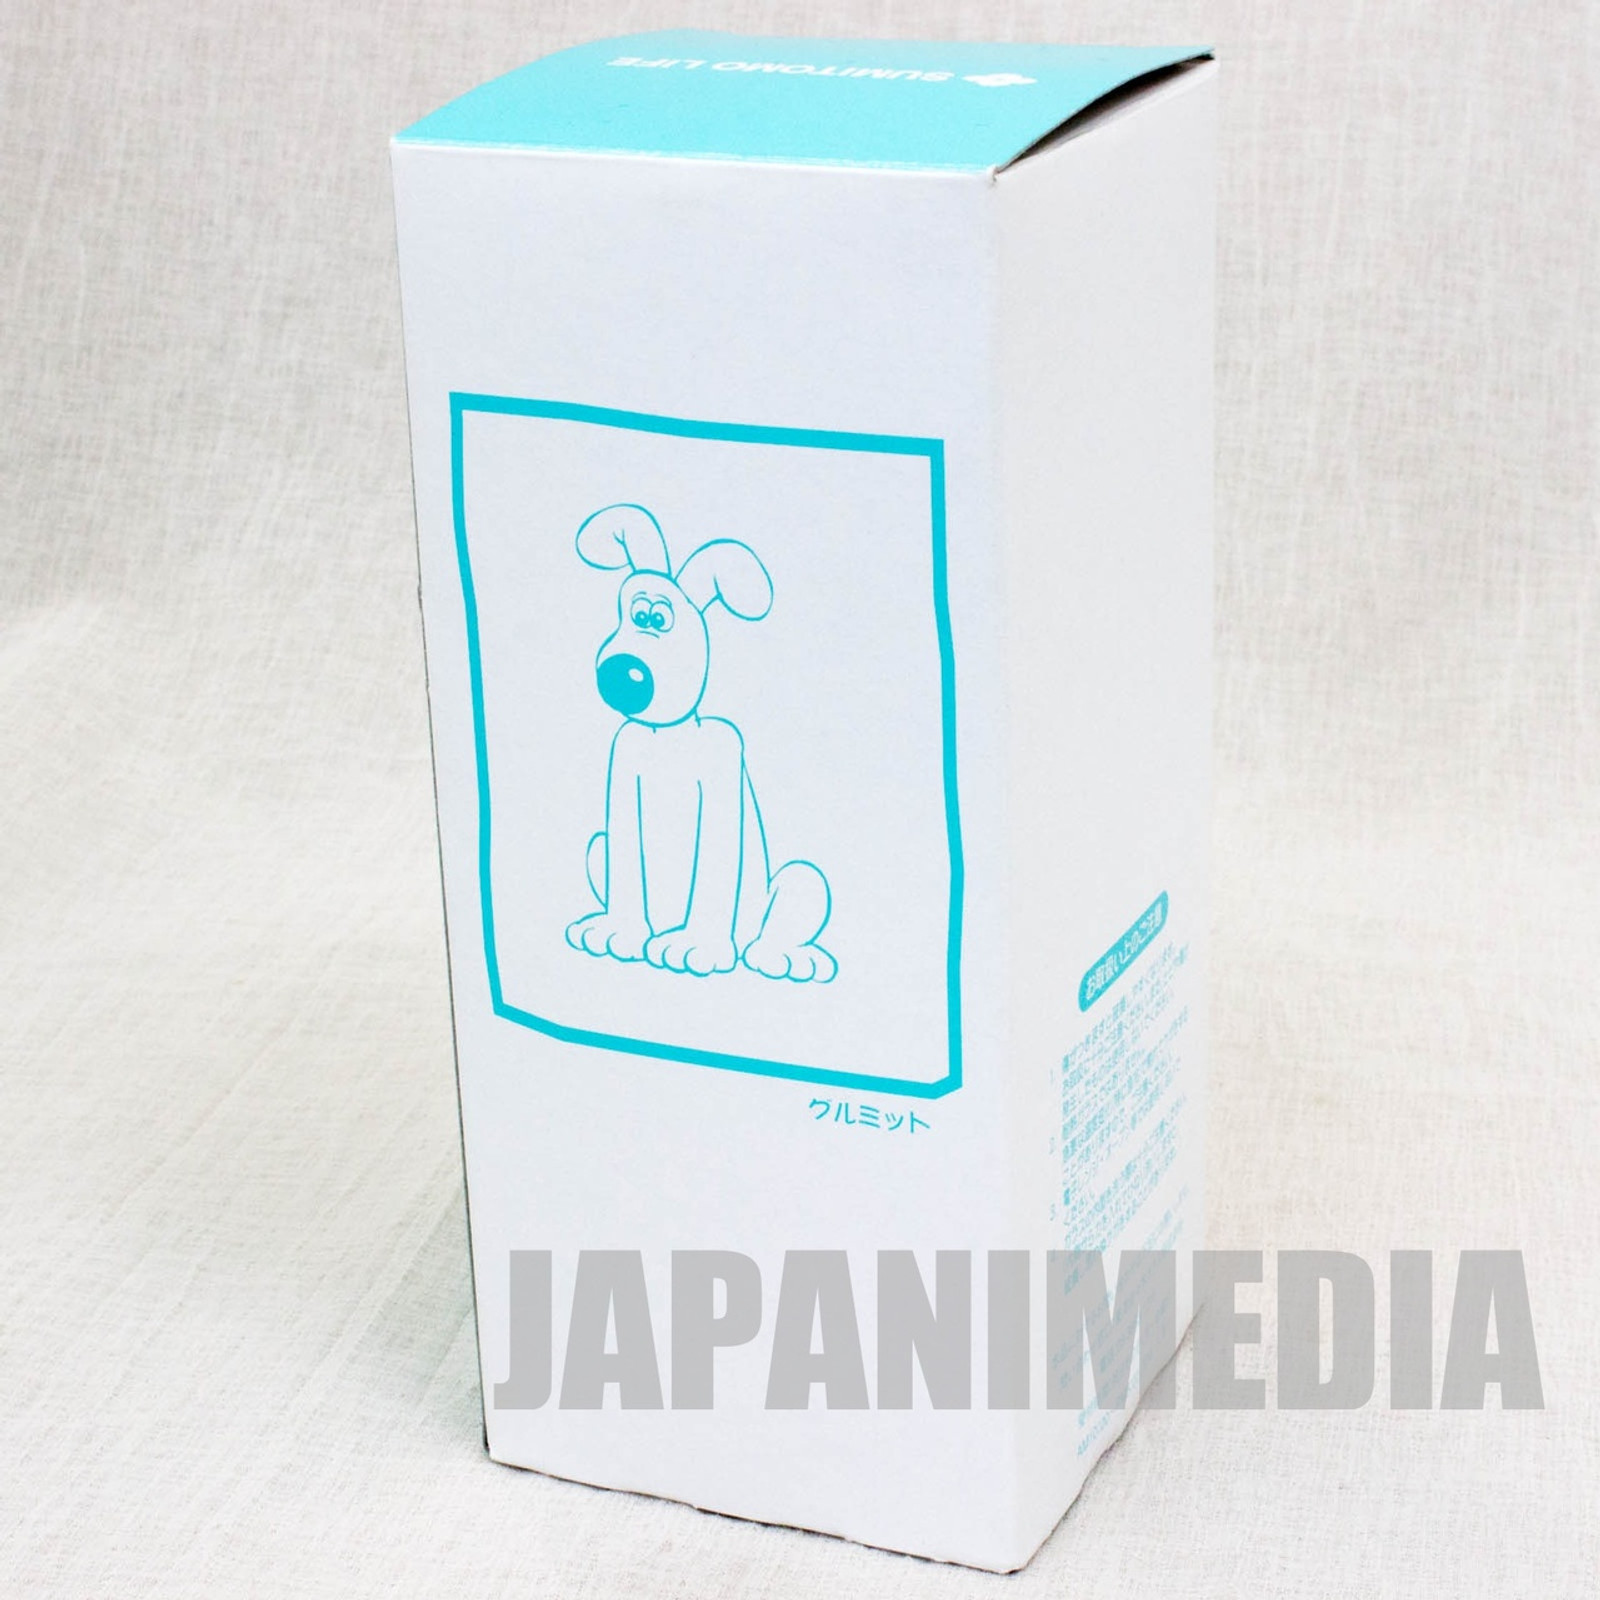 Wallace & Gromit Glass Blue ver. Sumitomo Life Novelty JAPAN Ardman ANIME